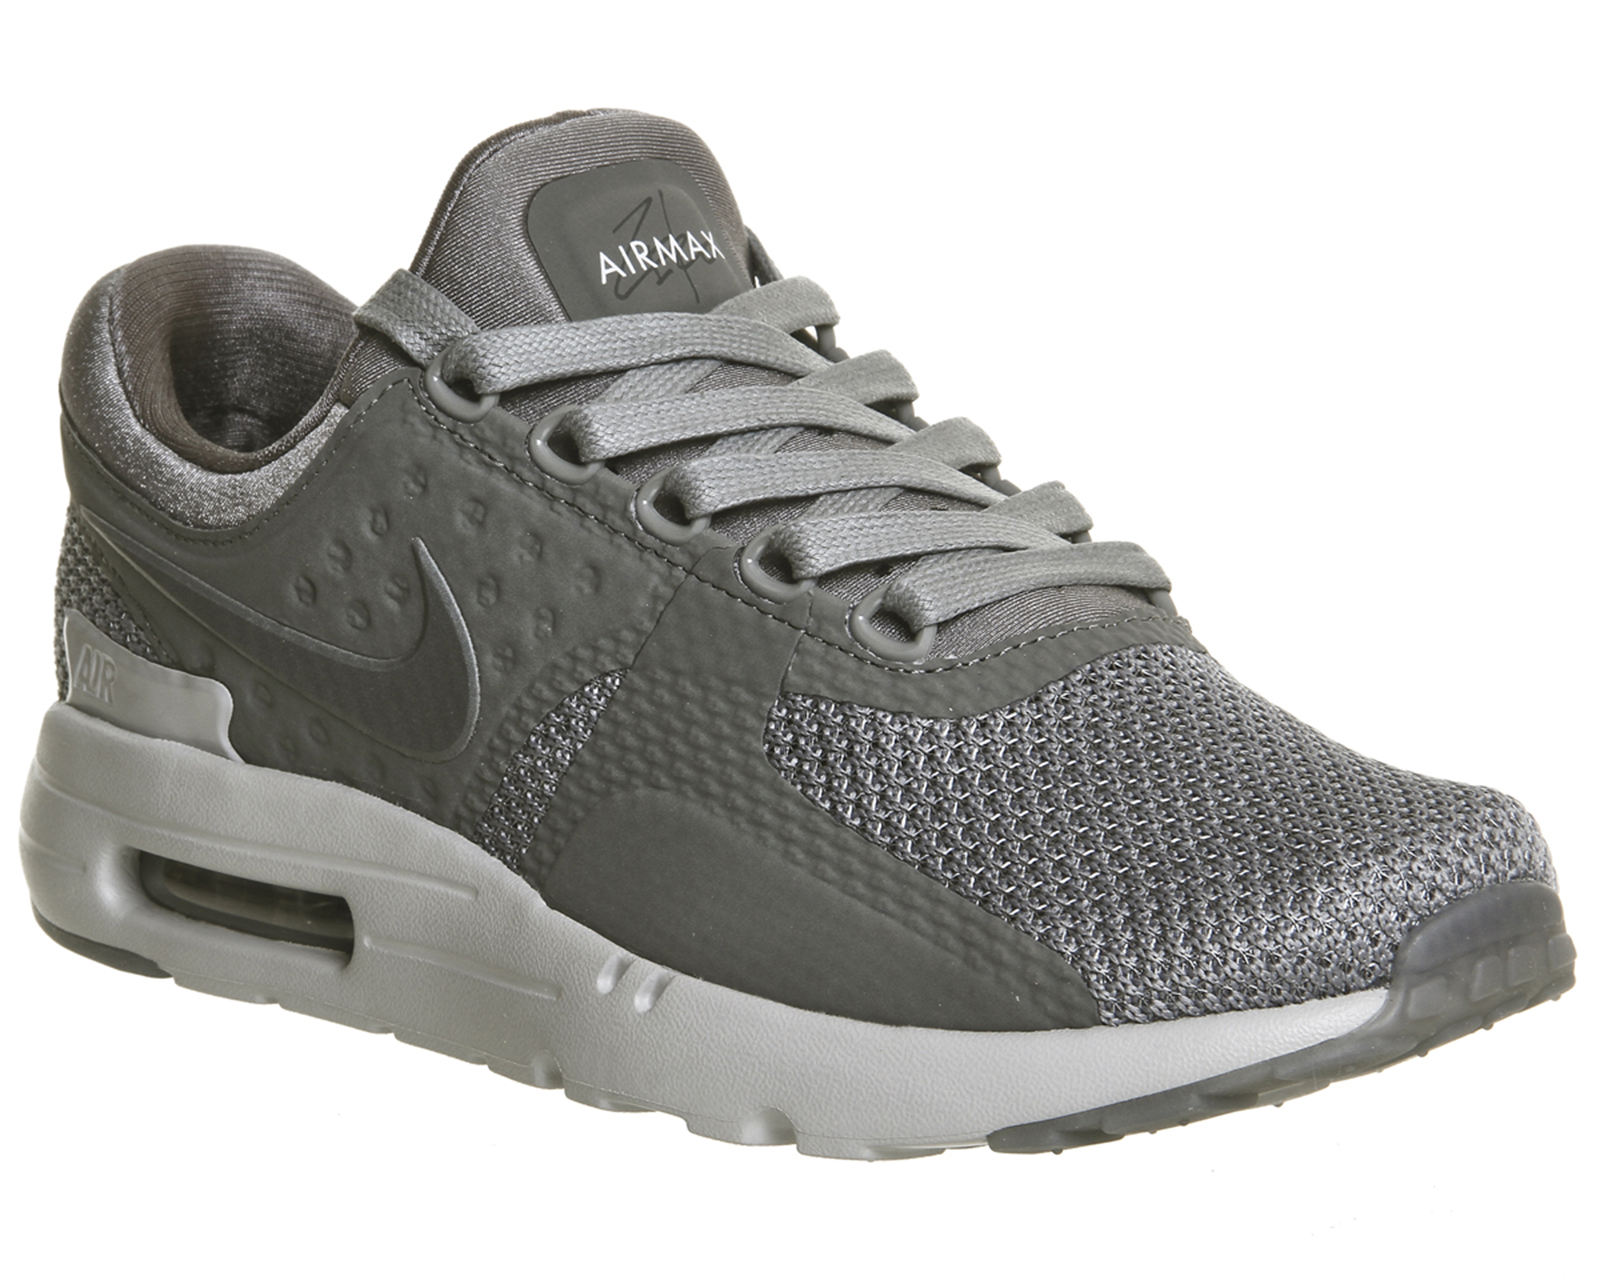 NikeAir Max ZeroCool Grey Wolf Grey Qs